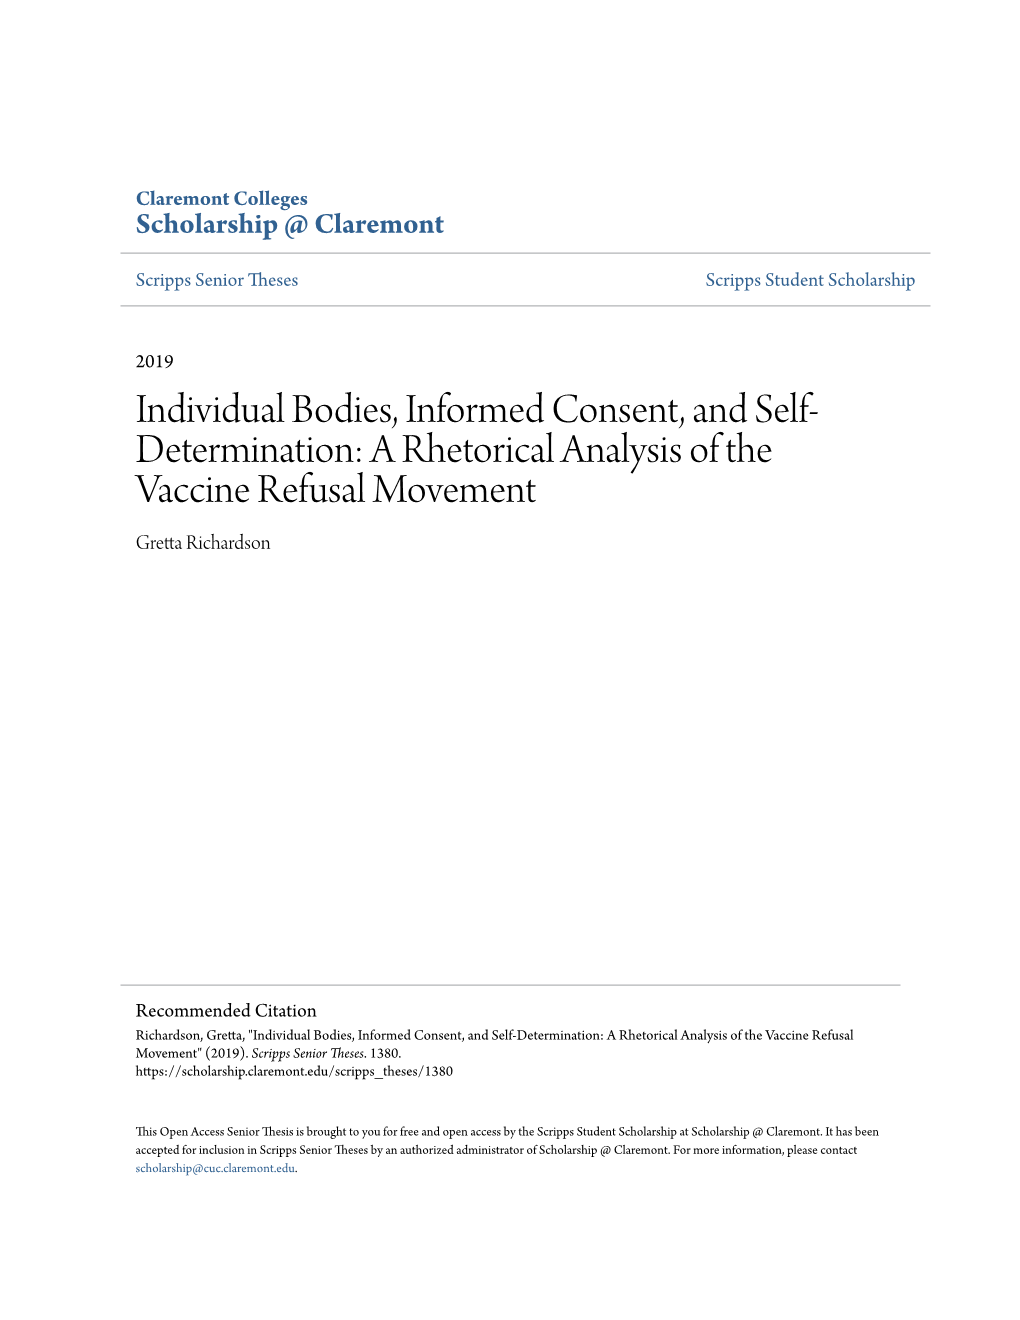 A Rhetorical Analysis of the Vaccine Refusal Movement Gretta Richardson